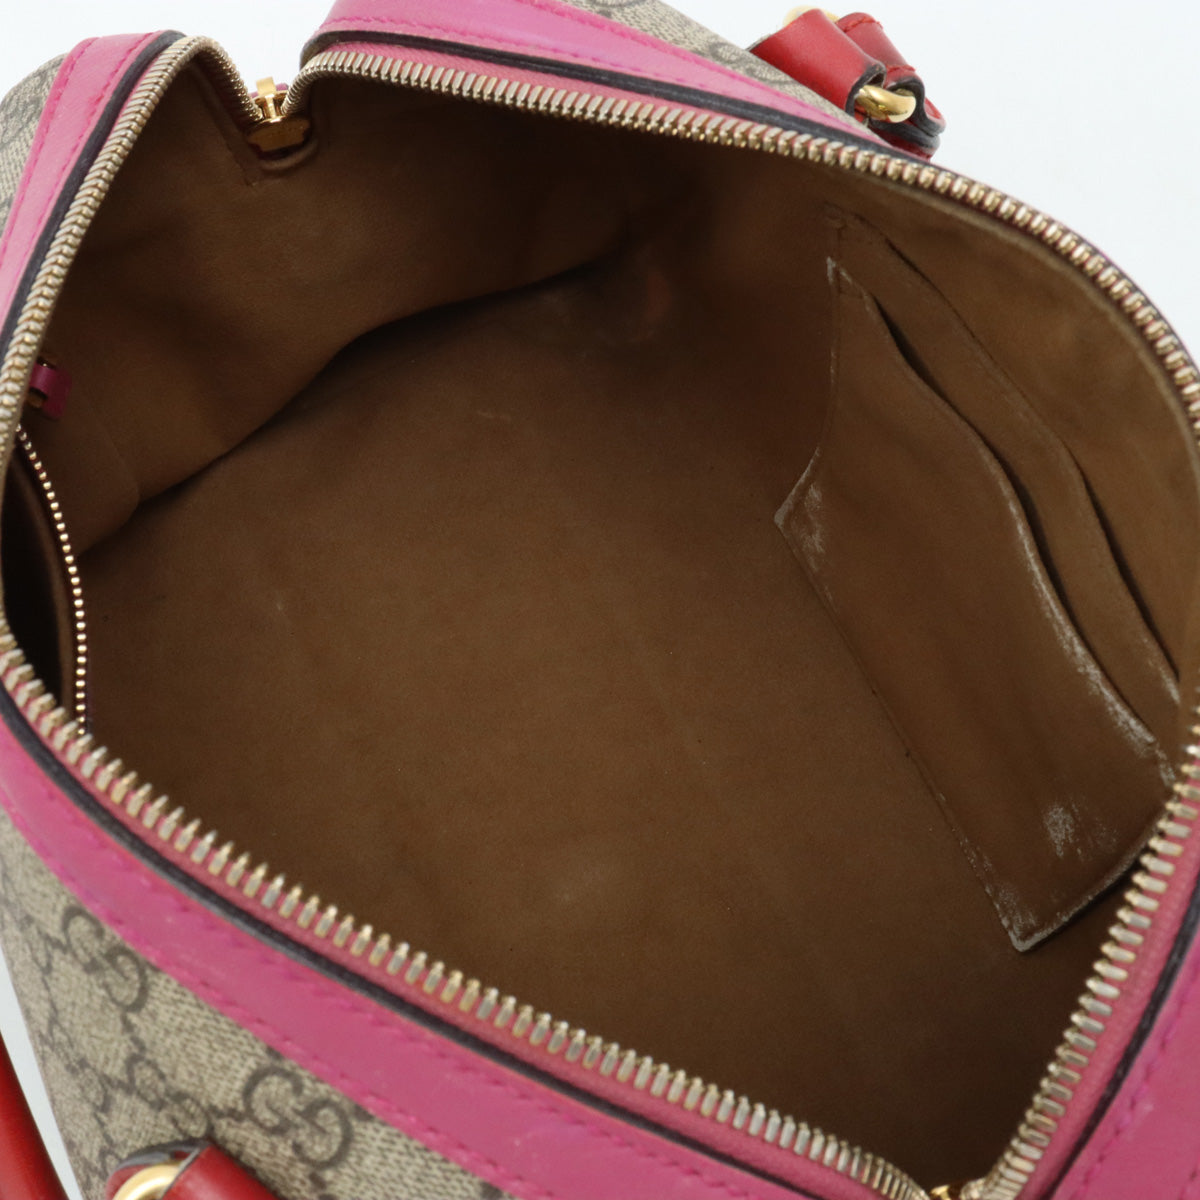 GUCCI Gucci GG Spring Handbag Mini Boston Bag 2WAY Shoulder Bag Leather Beige Pink Red Gold  409529 Blumin